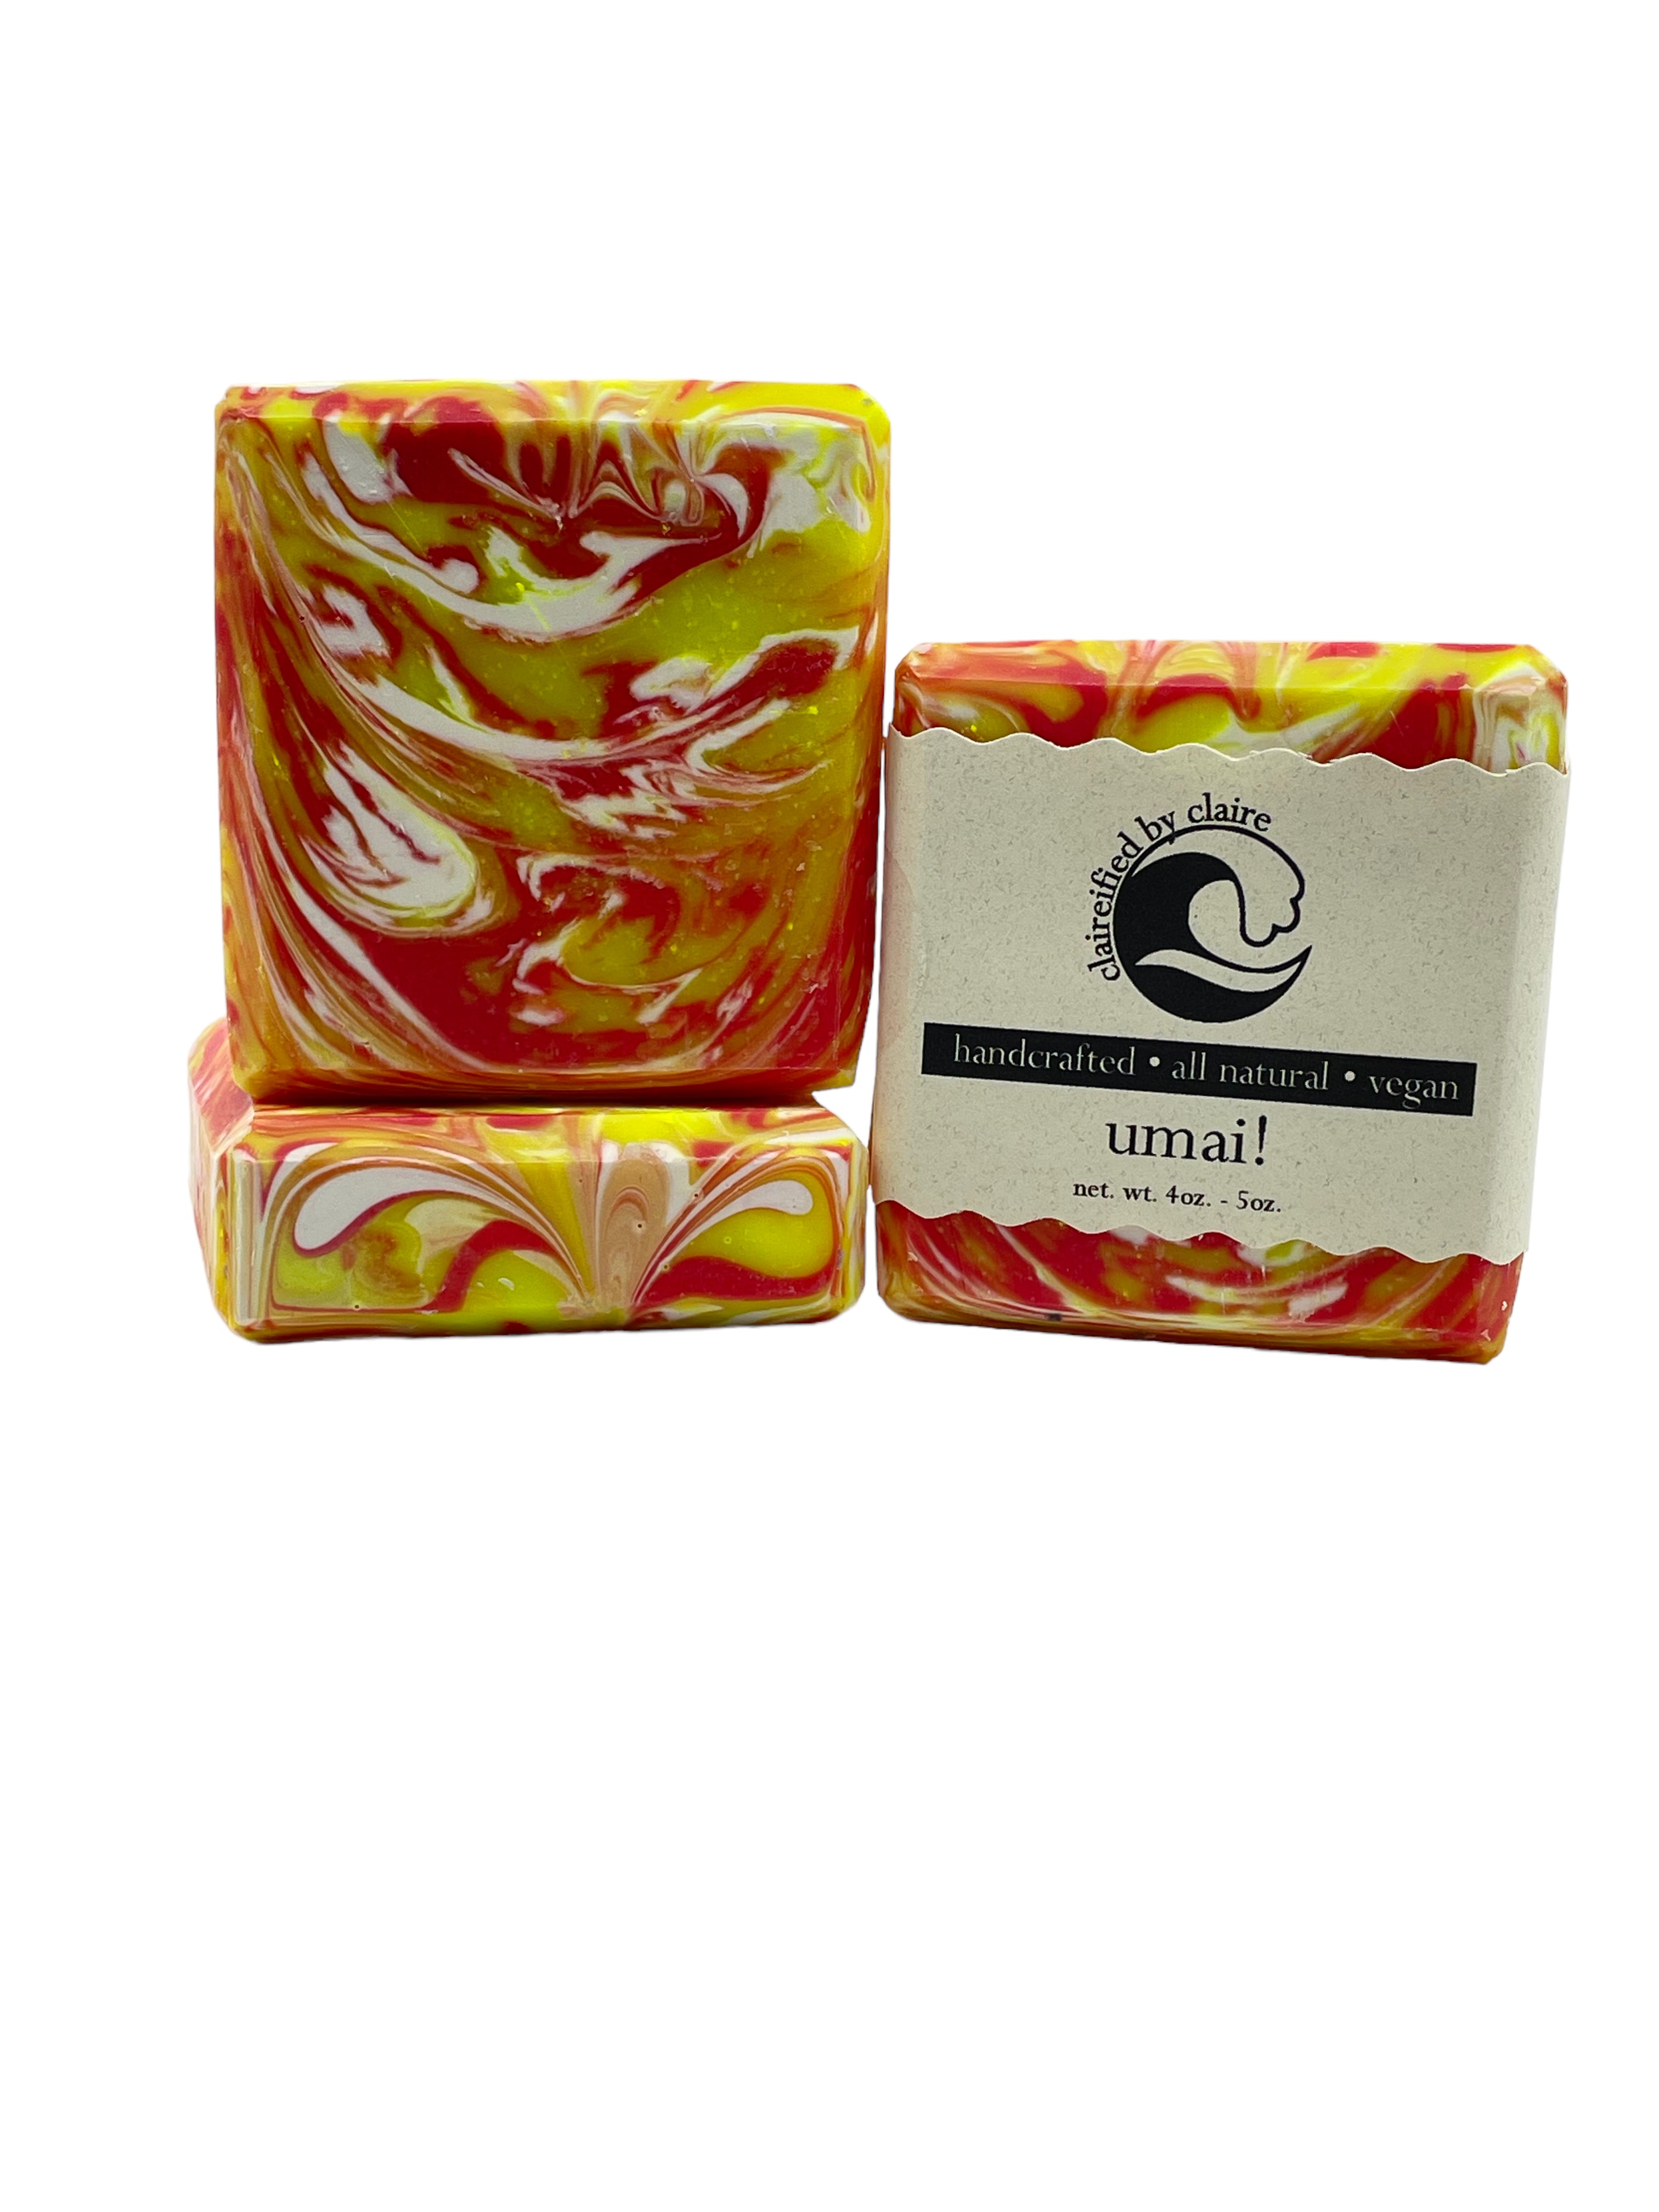 Umai! - The Flame Hashira Inspired Soap